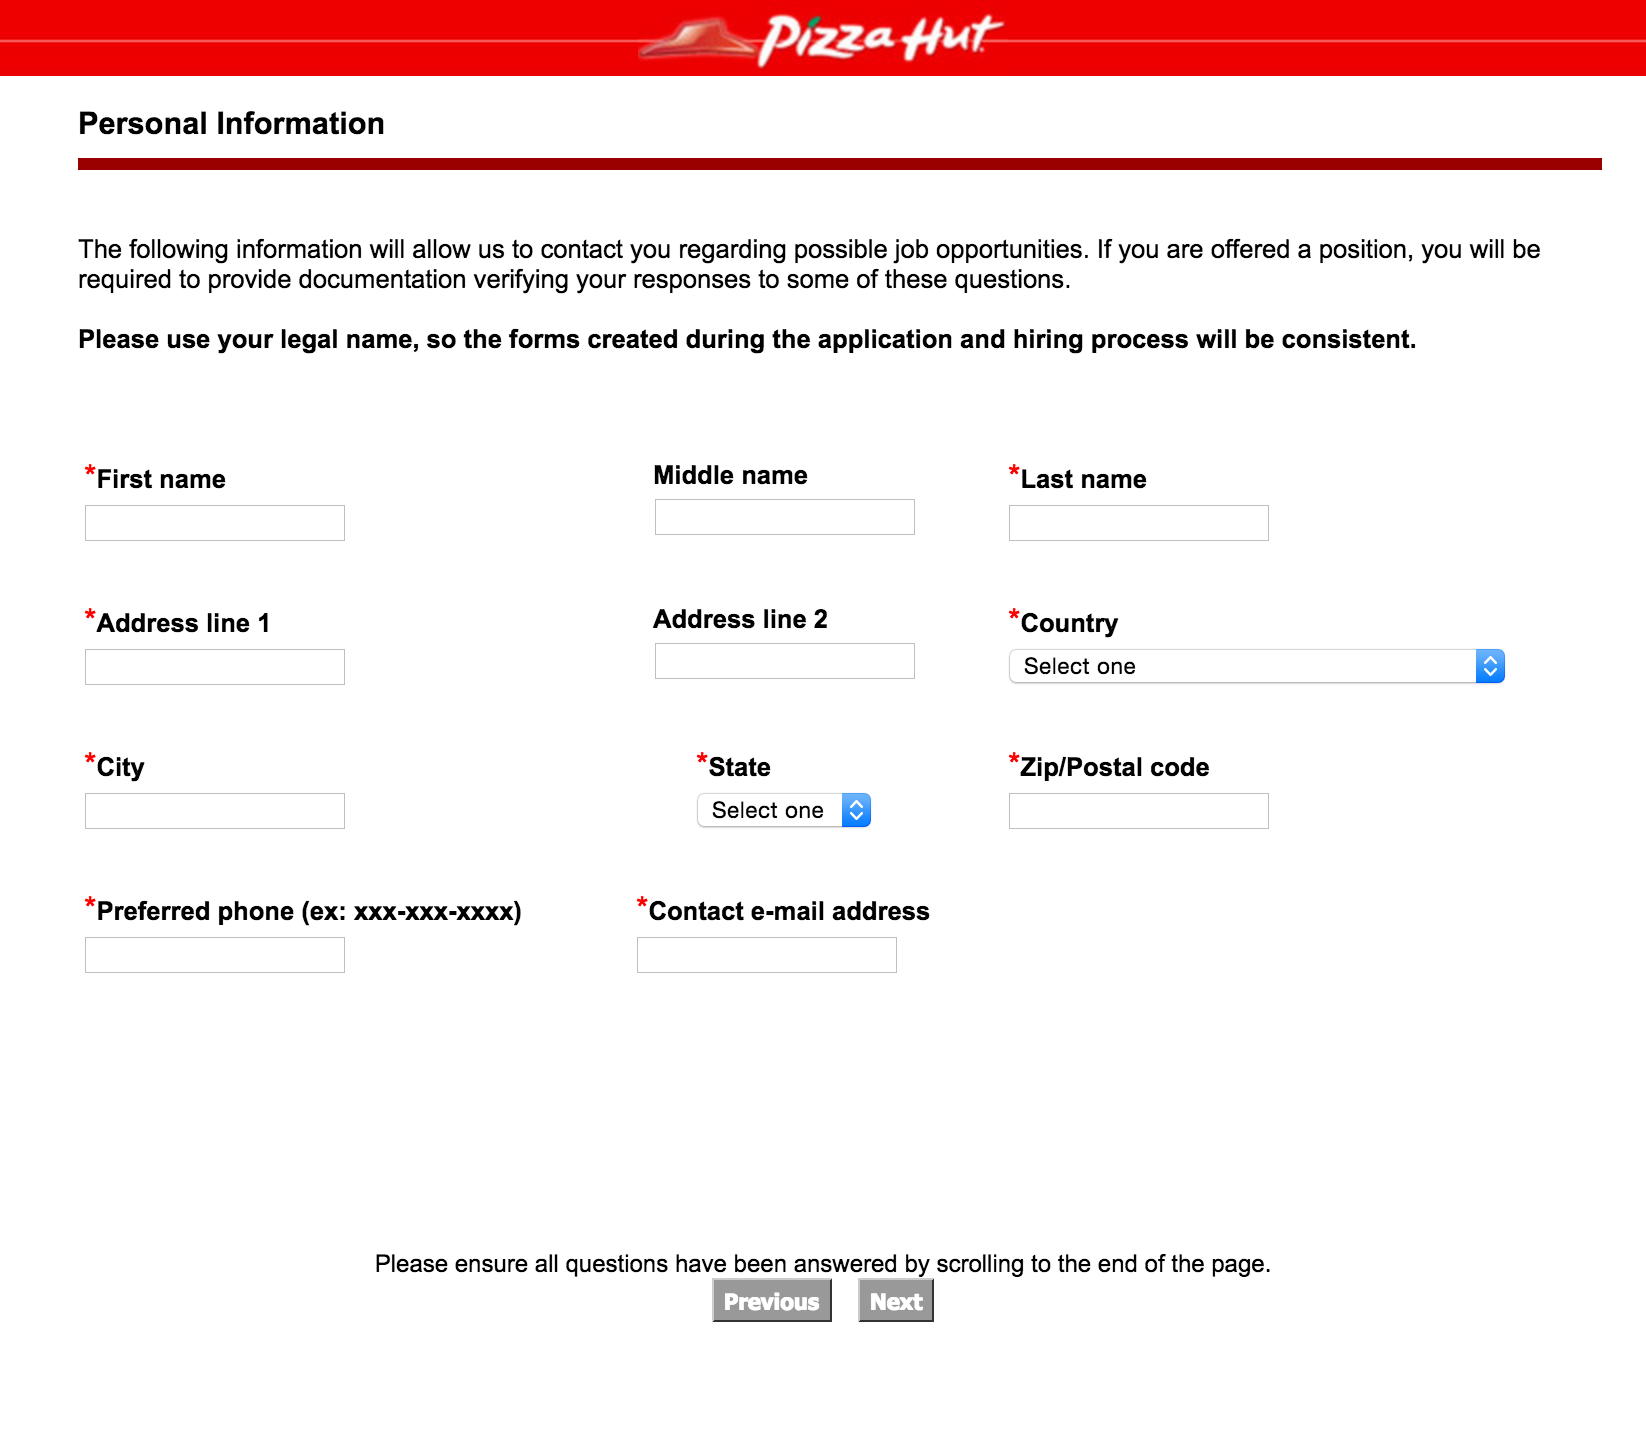 Online job applications for pizza hut